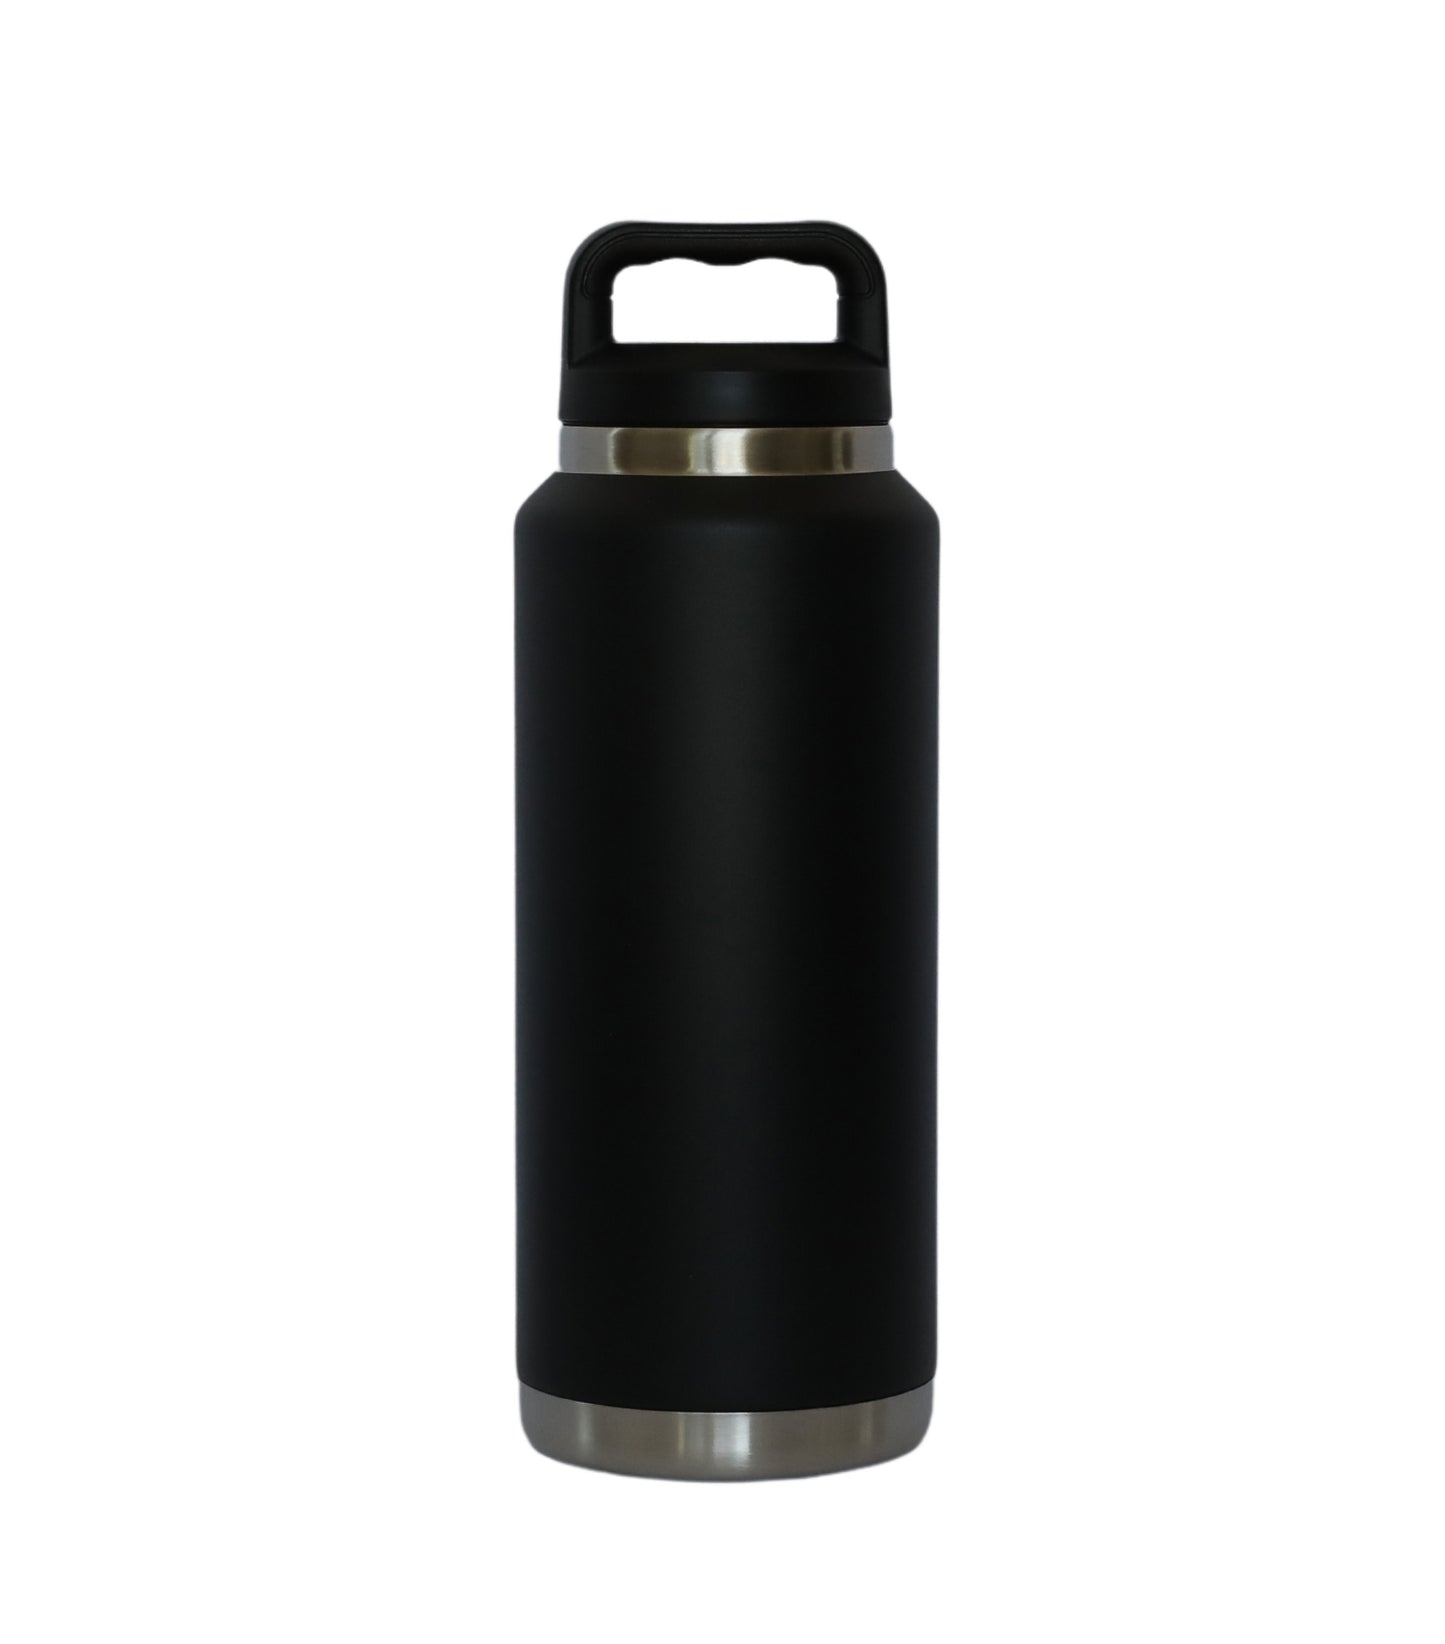 36 Oz Stainless Steel Water Bottle - Black